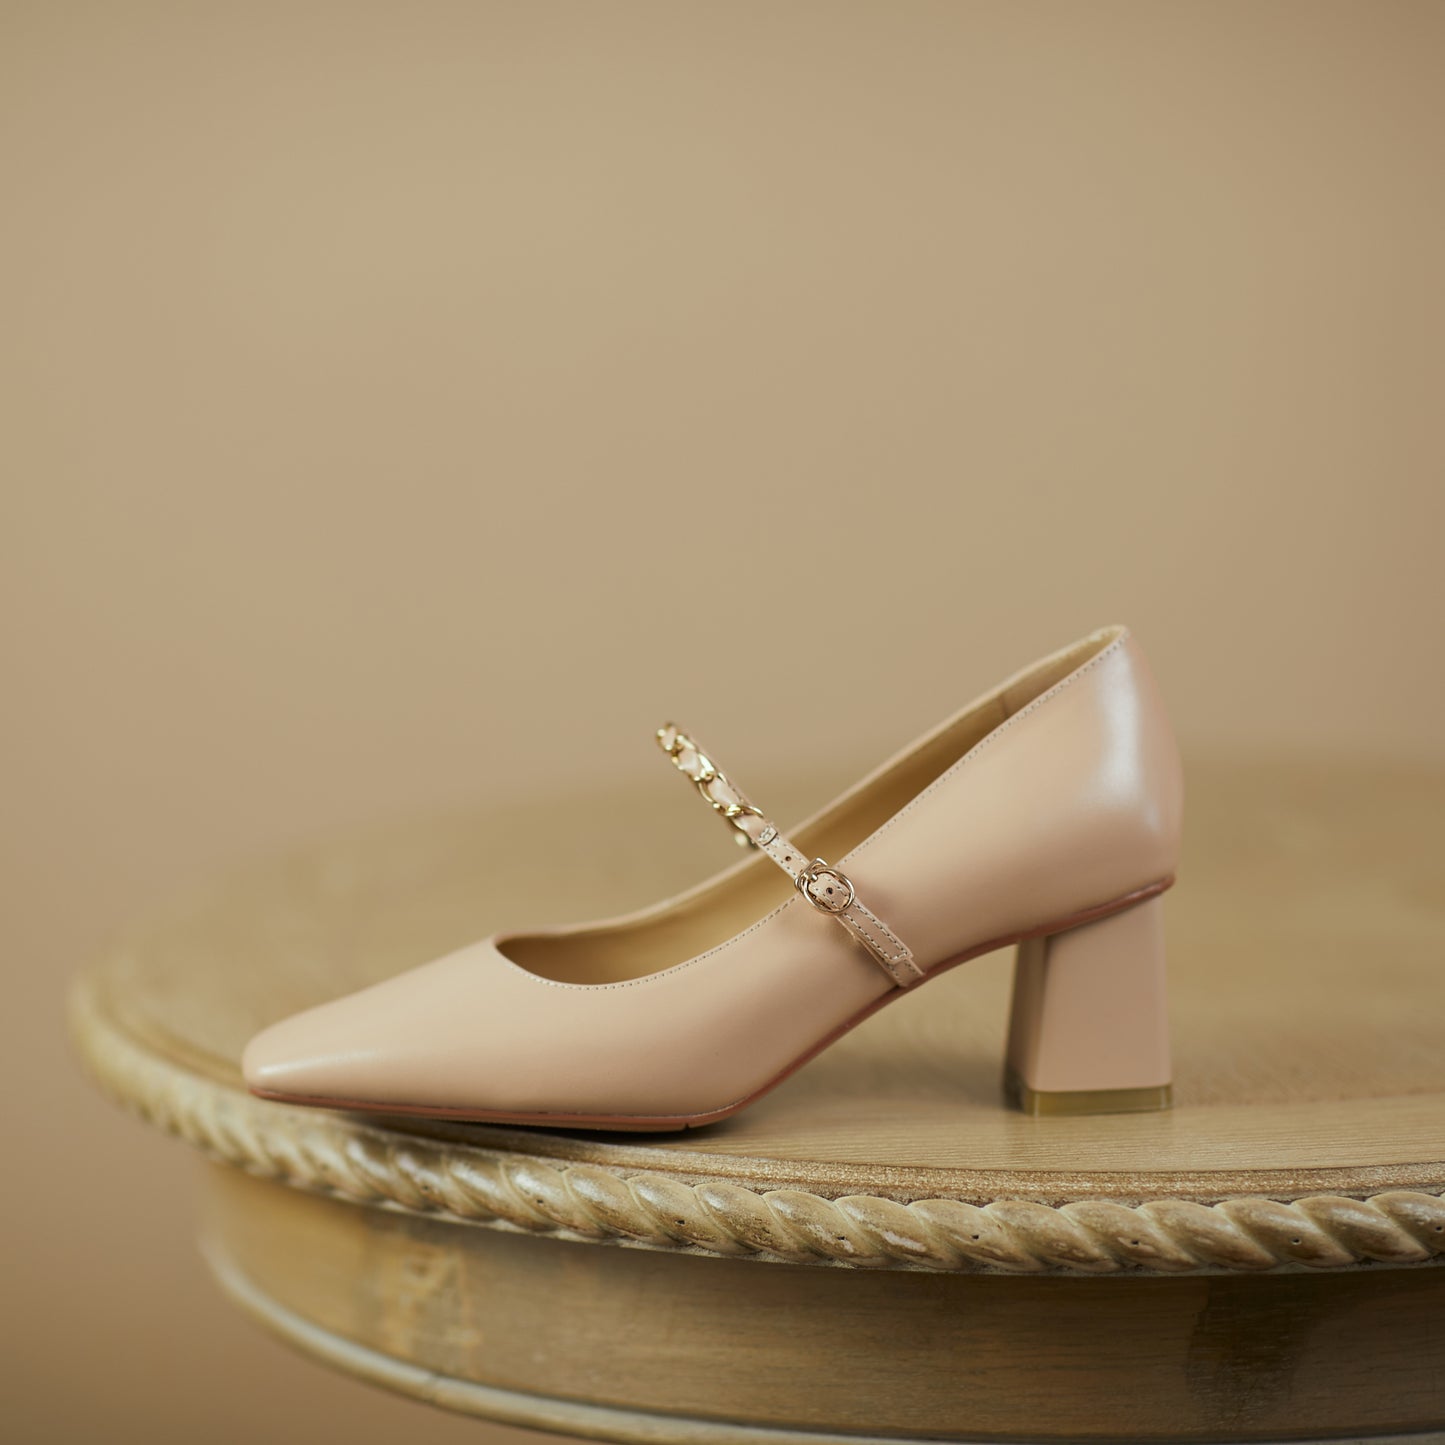 TinaCus Women's Genuine Leather Handmade Mid Chunky Heel Classic Square Toe Buckle Retro Mary Jane Pump Shoes